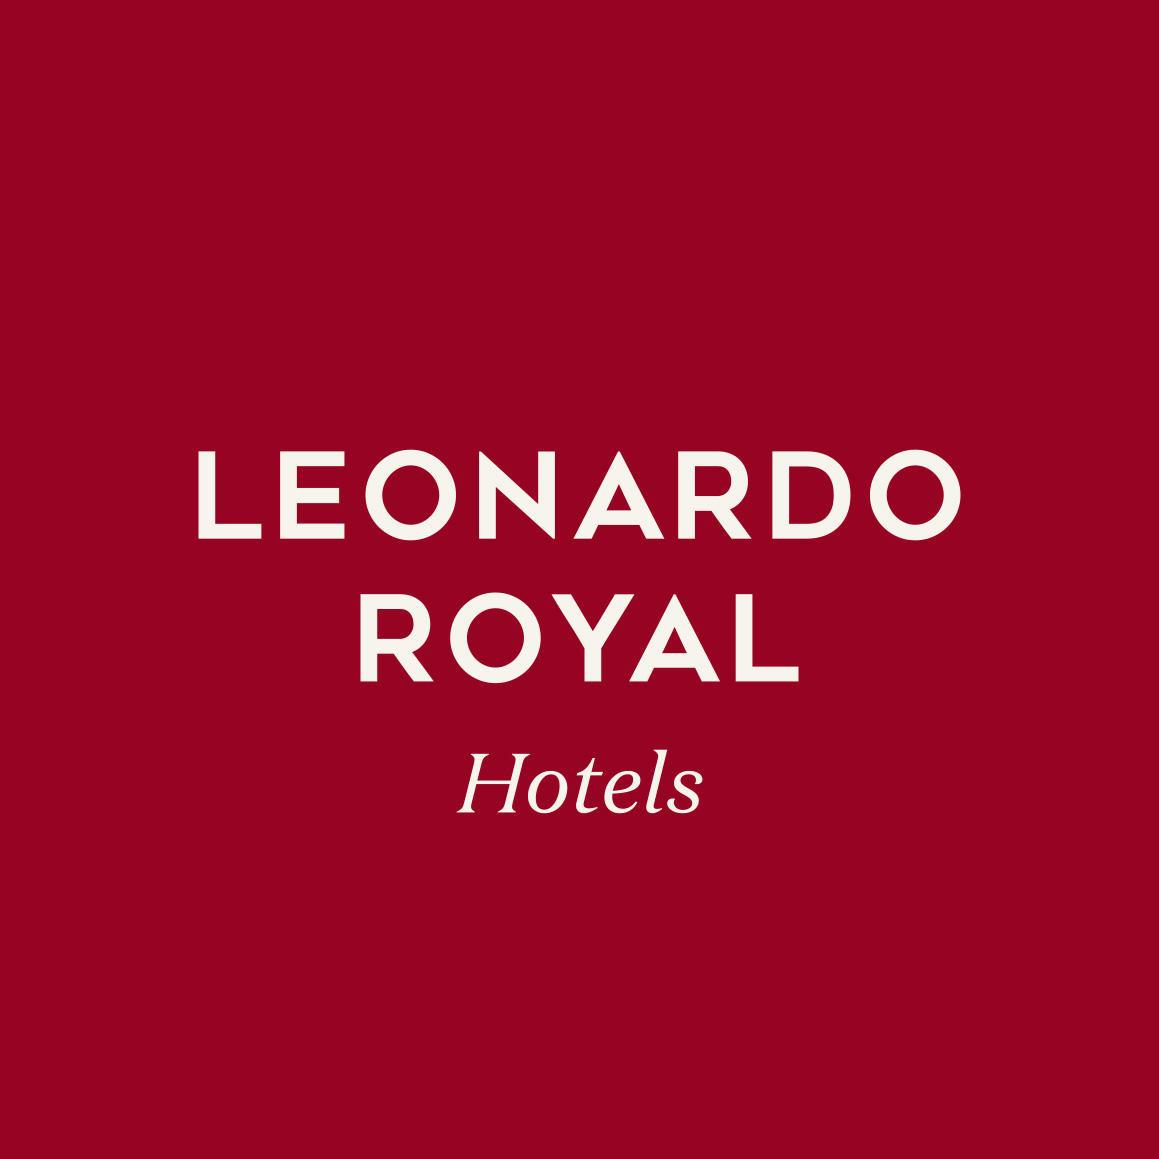 Leonardo Royal Hotel Edinburgh - Edinburgh, Midlothian EH1 1DH - 01312 003300 | ShowMeLocal.com